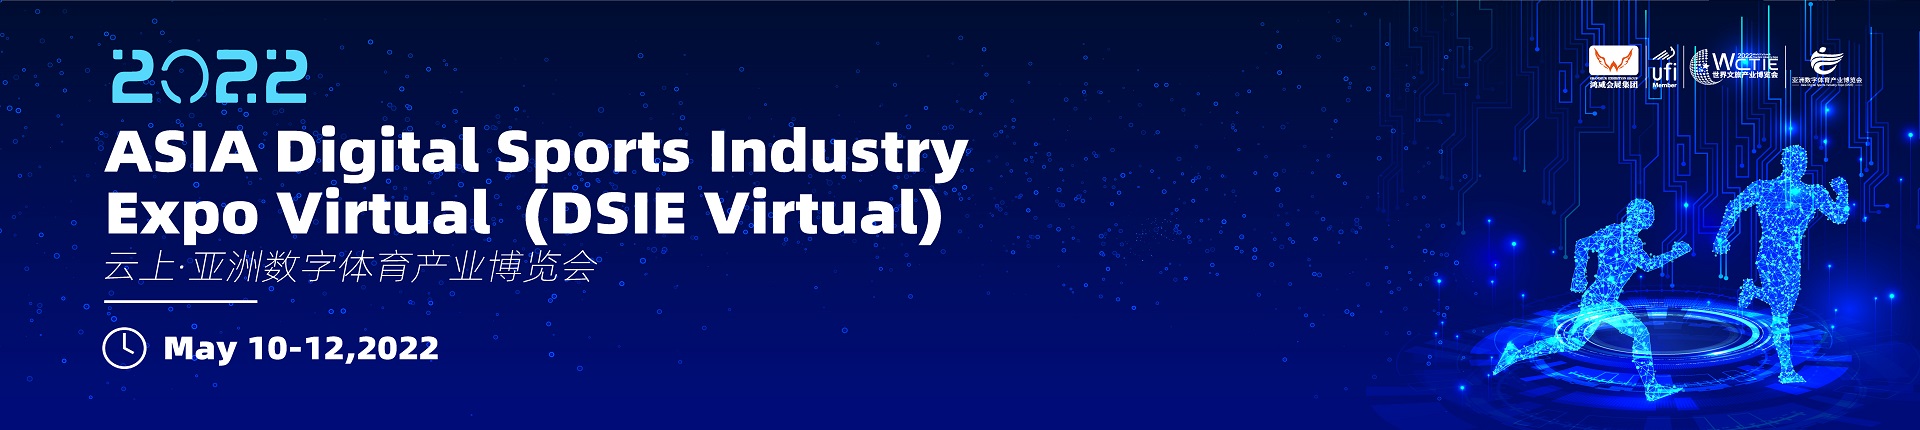 2022 Digital Sports Industry Expo Virtual (DSIE Virtual)